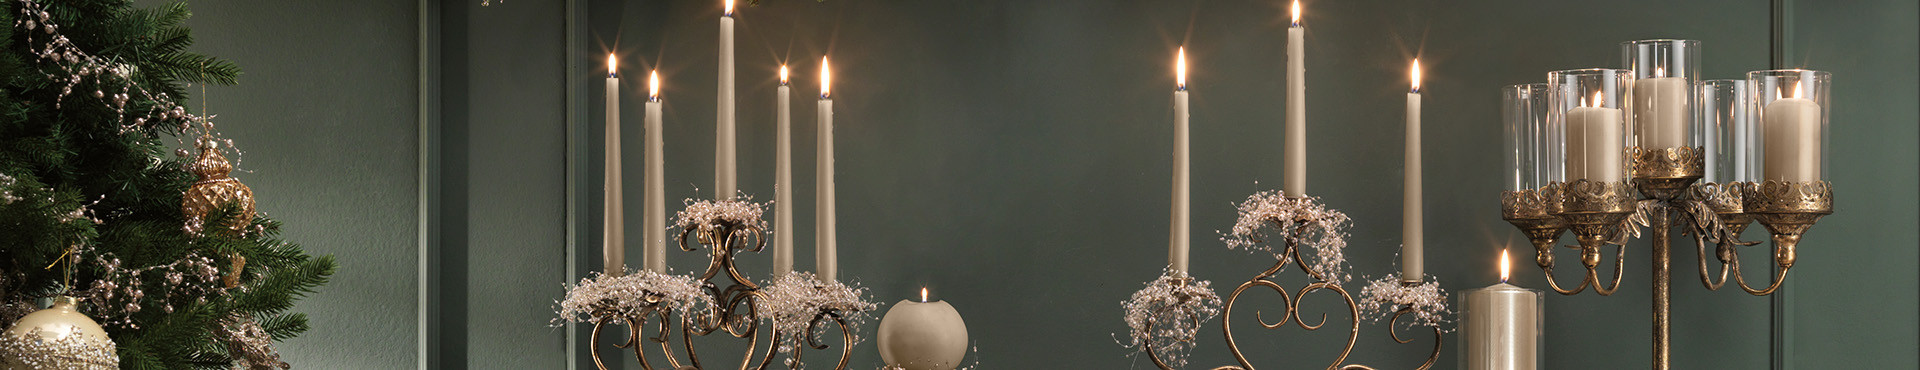 Candelieri, porta candele e candele